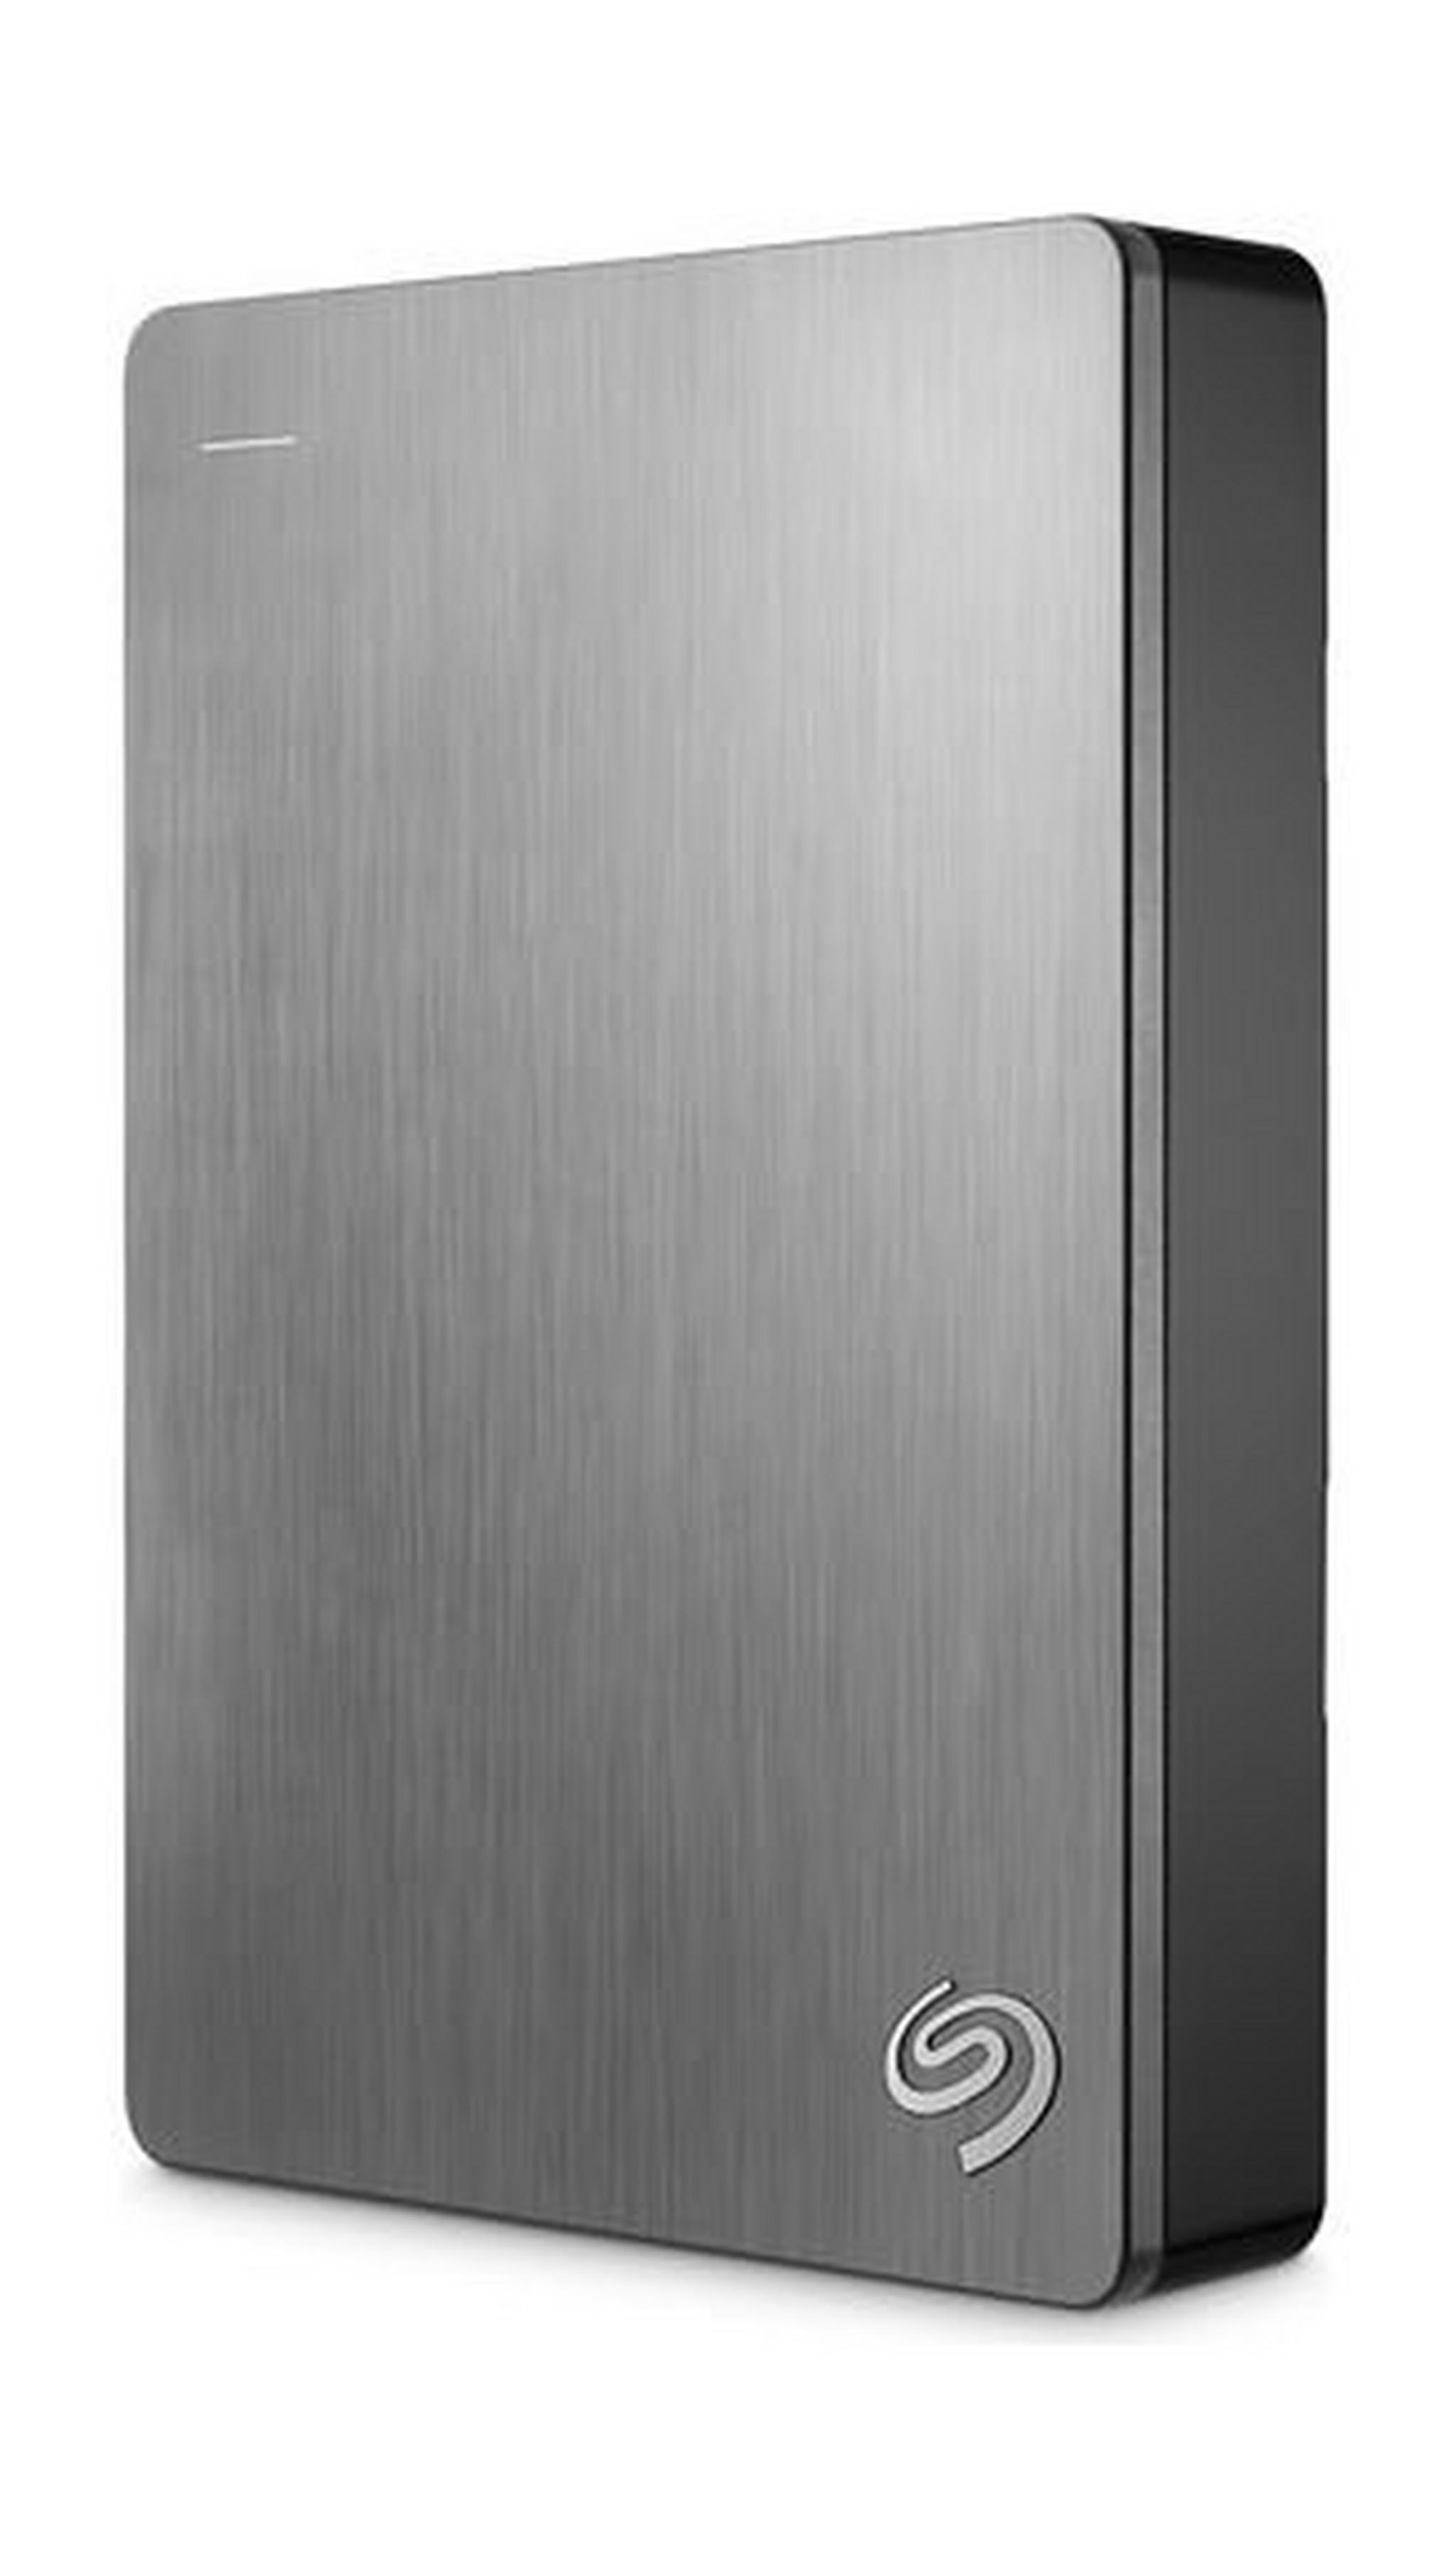 Seagate Backup Plus 4TB Portable Hard Drive (STDR4000900) - Silver